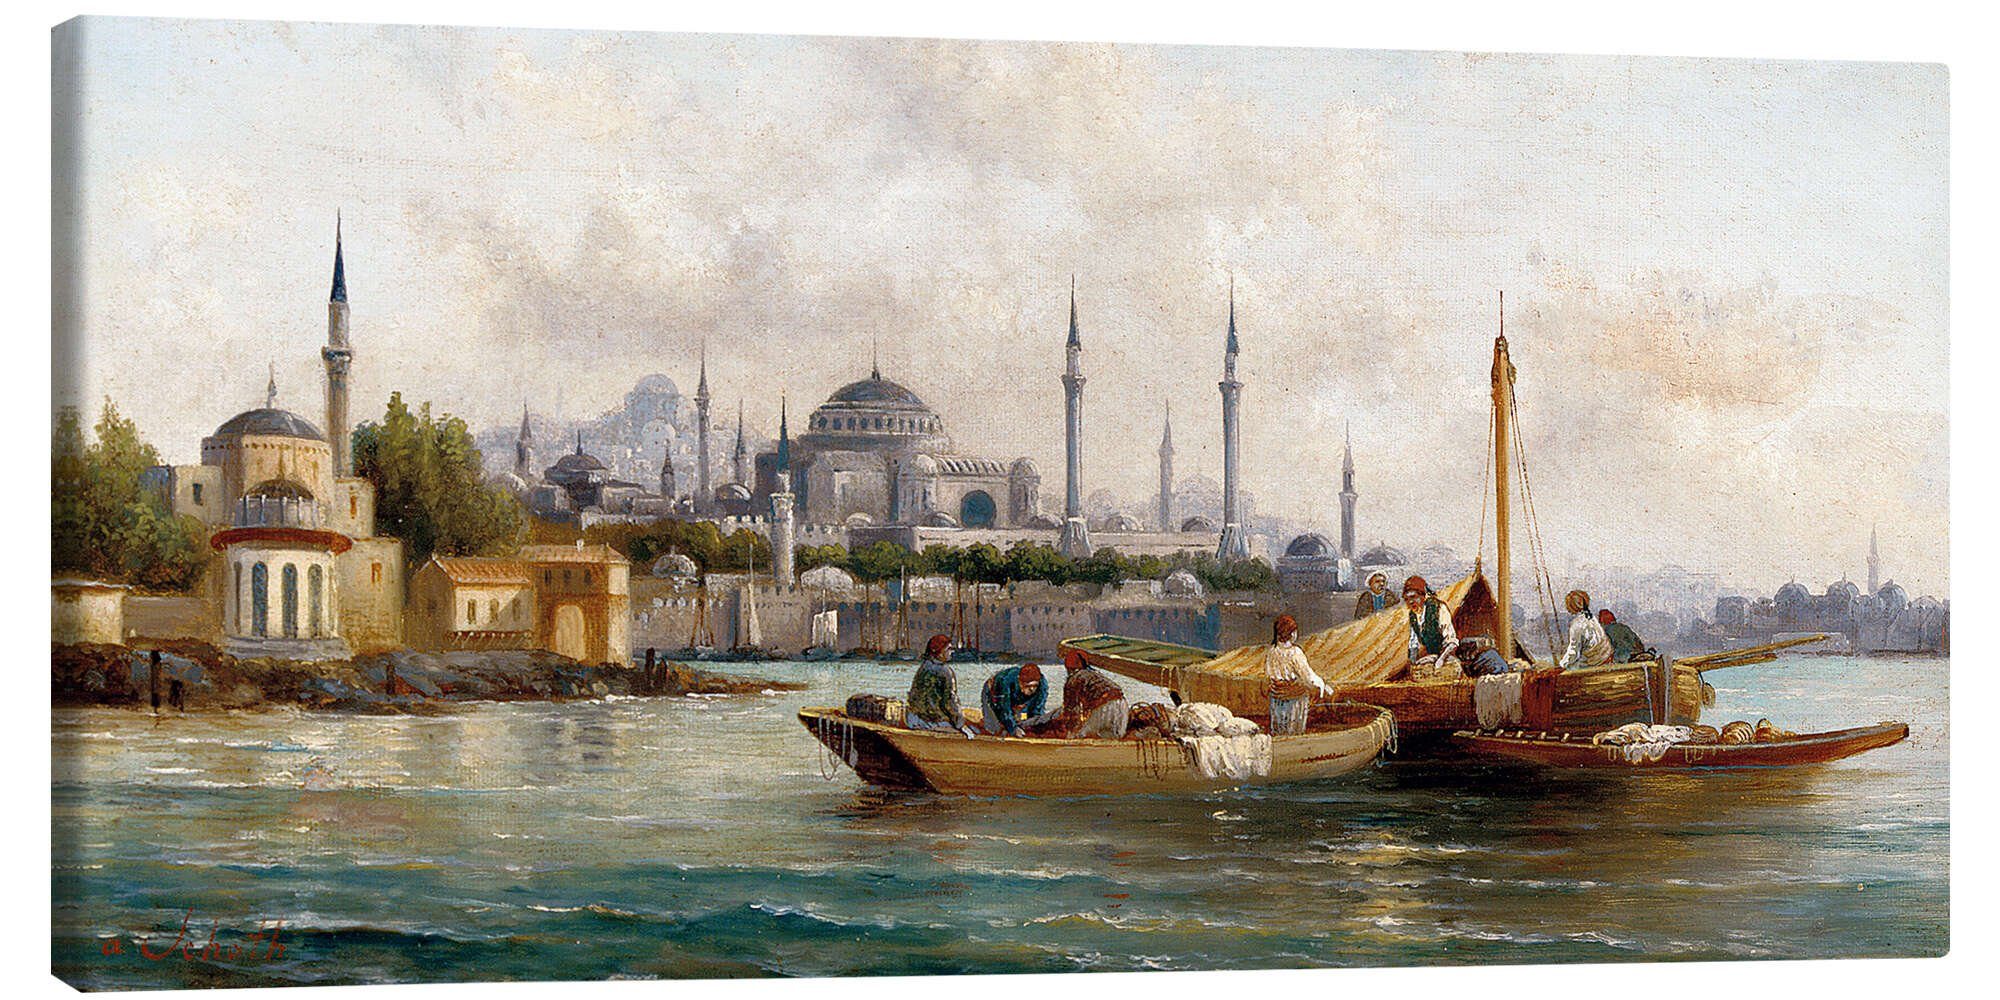 Posterlounge Leinwandbild Anton Schoth, Handelsschiffe vor der Hagia Sophia, Istanbul, Malerei